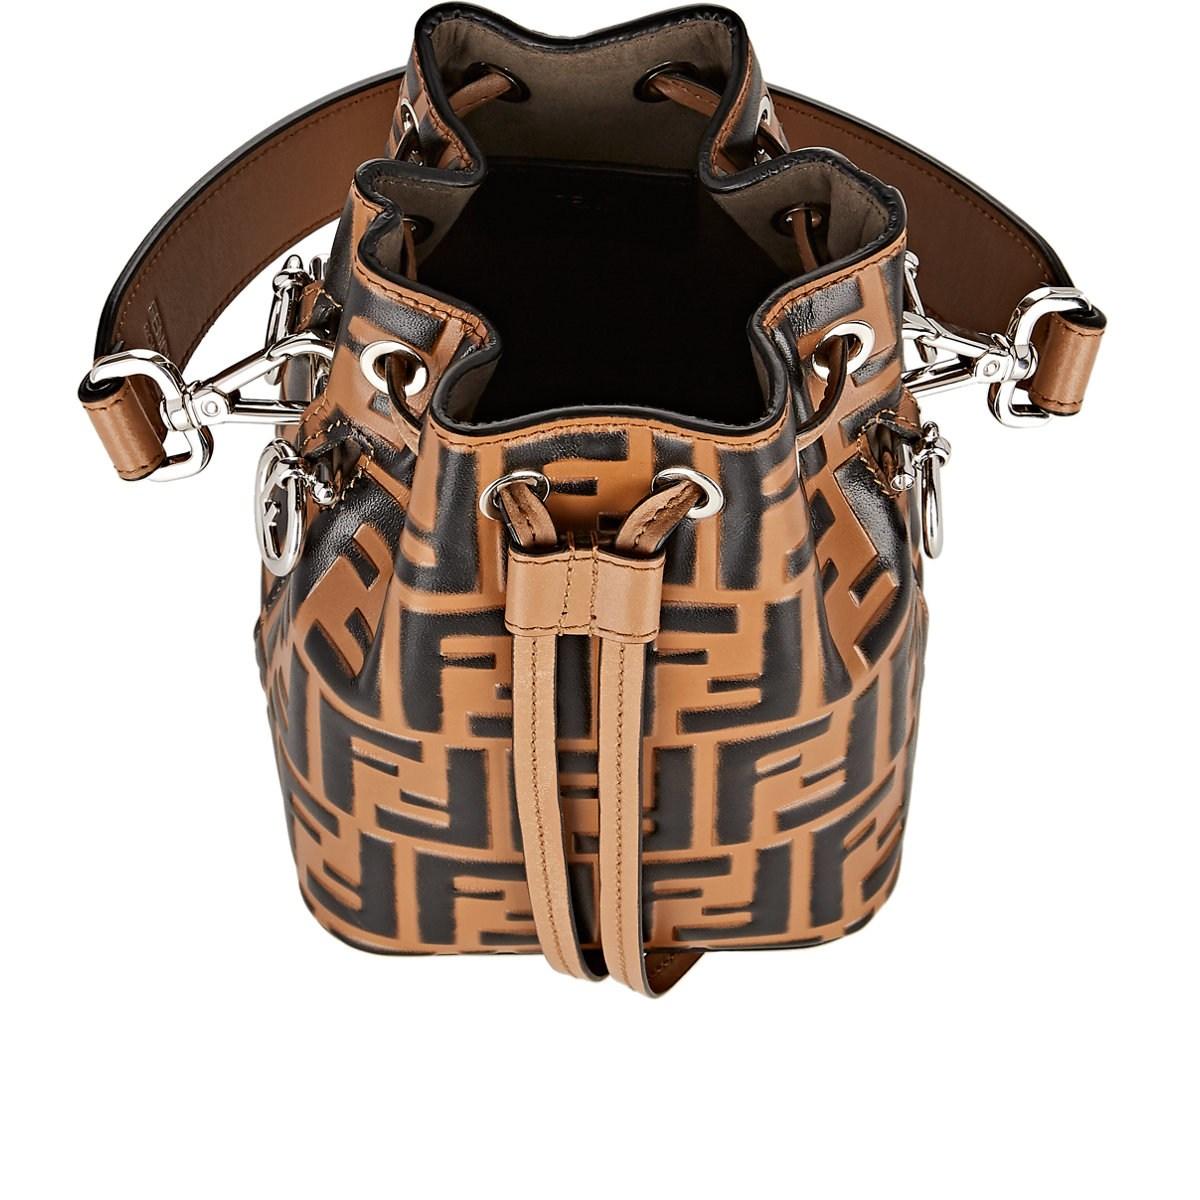 Fendi Leather Mon Tresor Mini Bucket Bag in Brown - Lyst